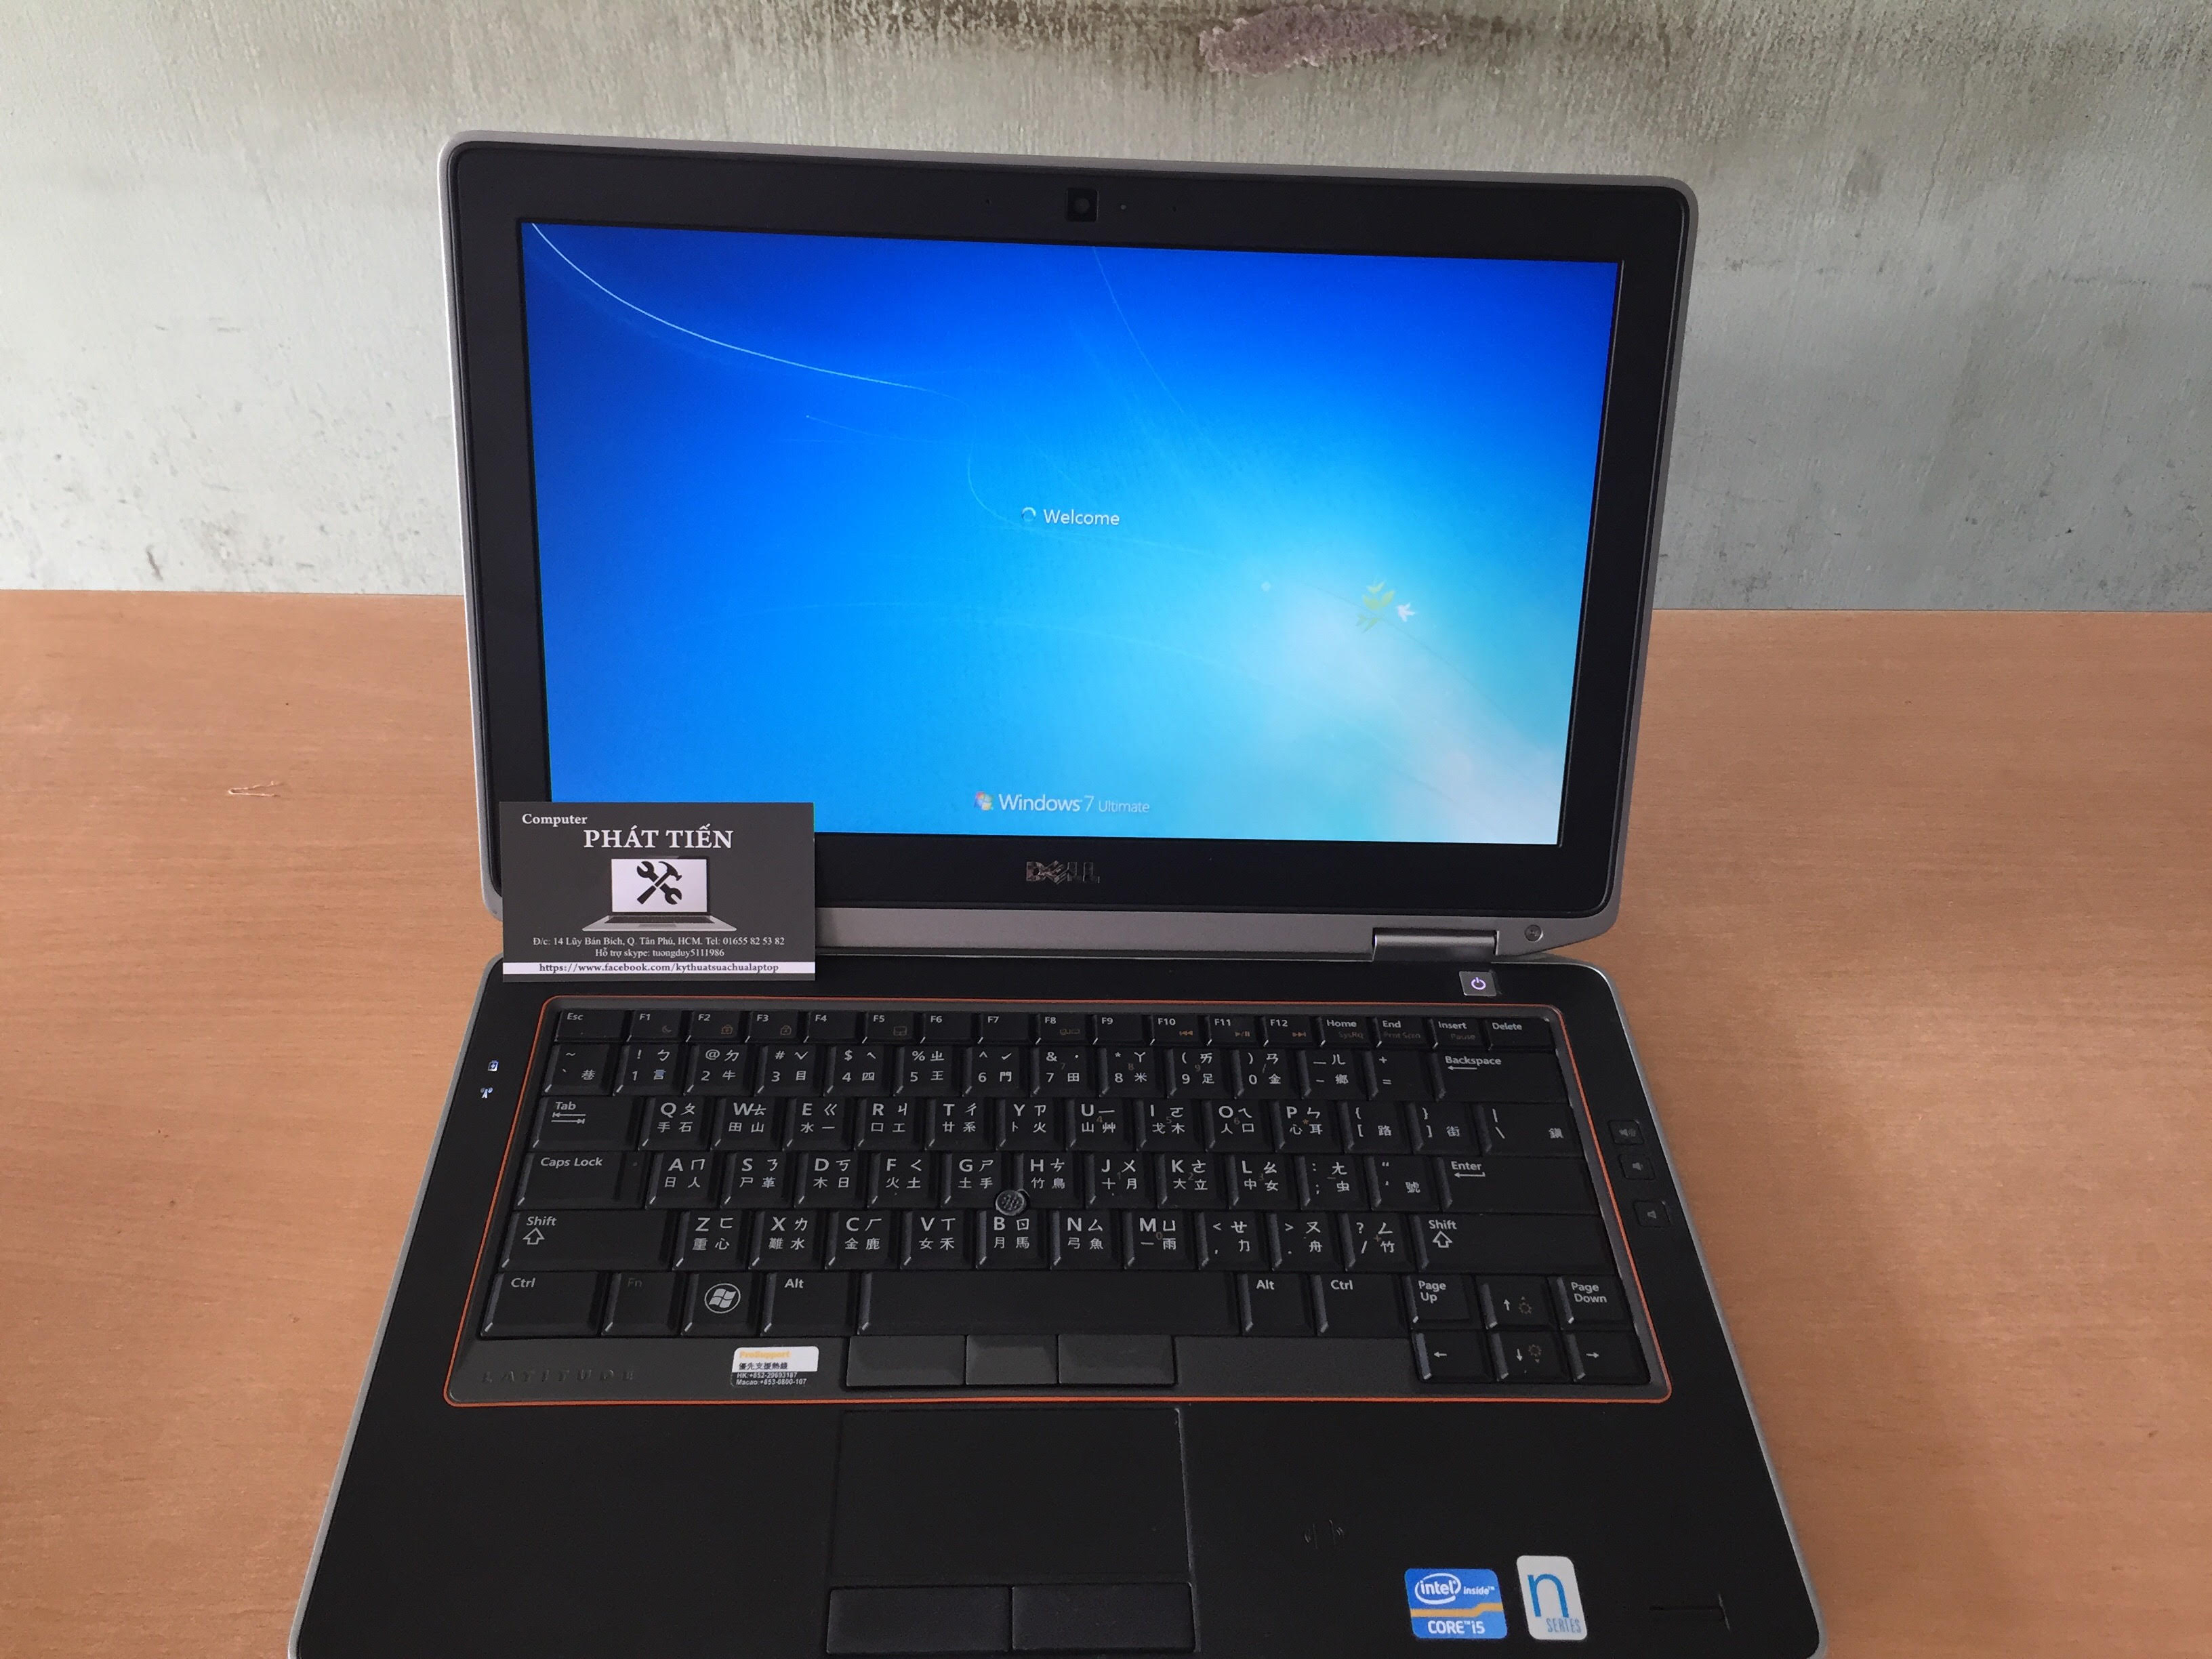 Laptop Dell Lalitude E6320 Core i5 2540M, ram 4G, Hdd 250G, 13.3 